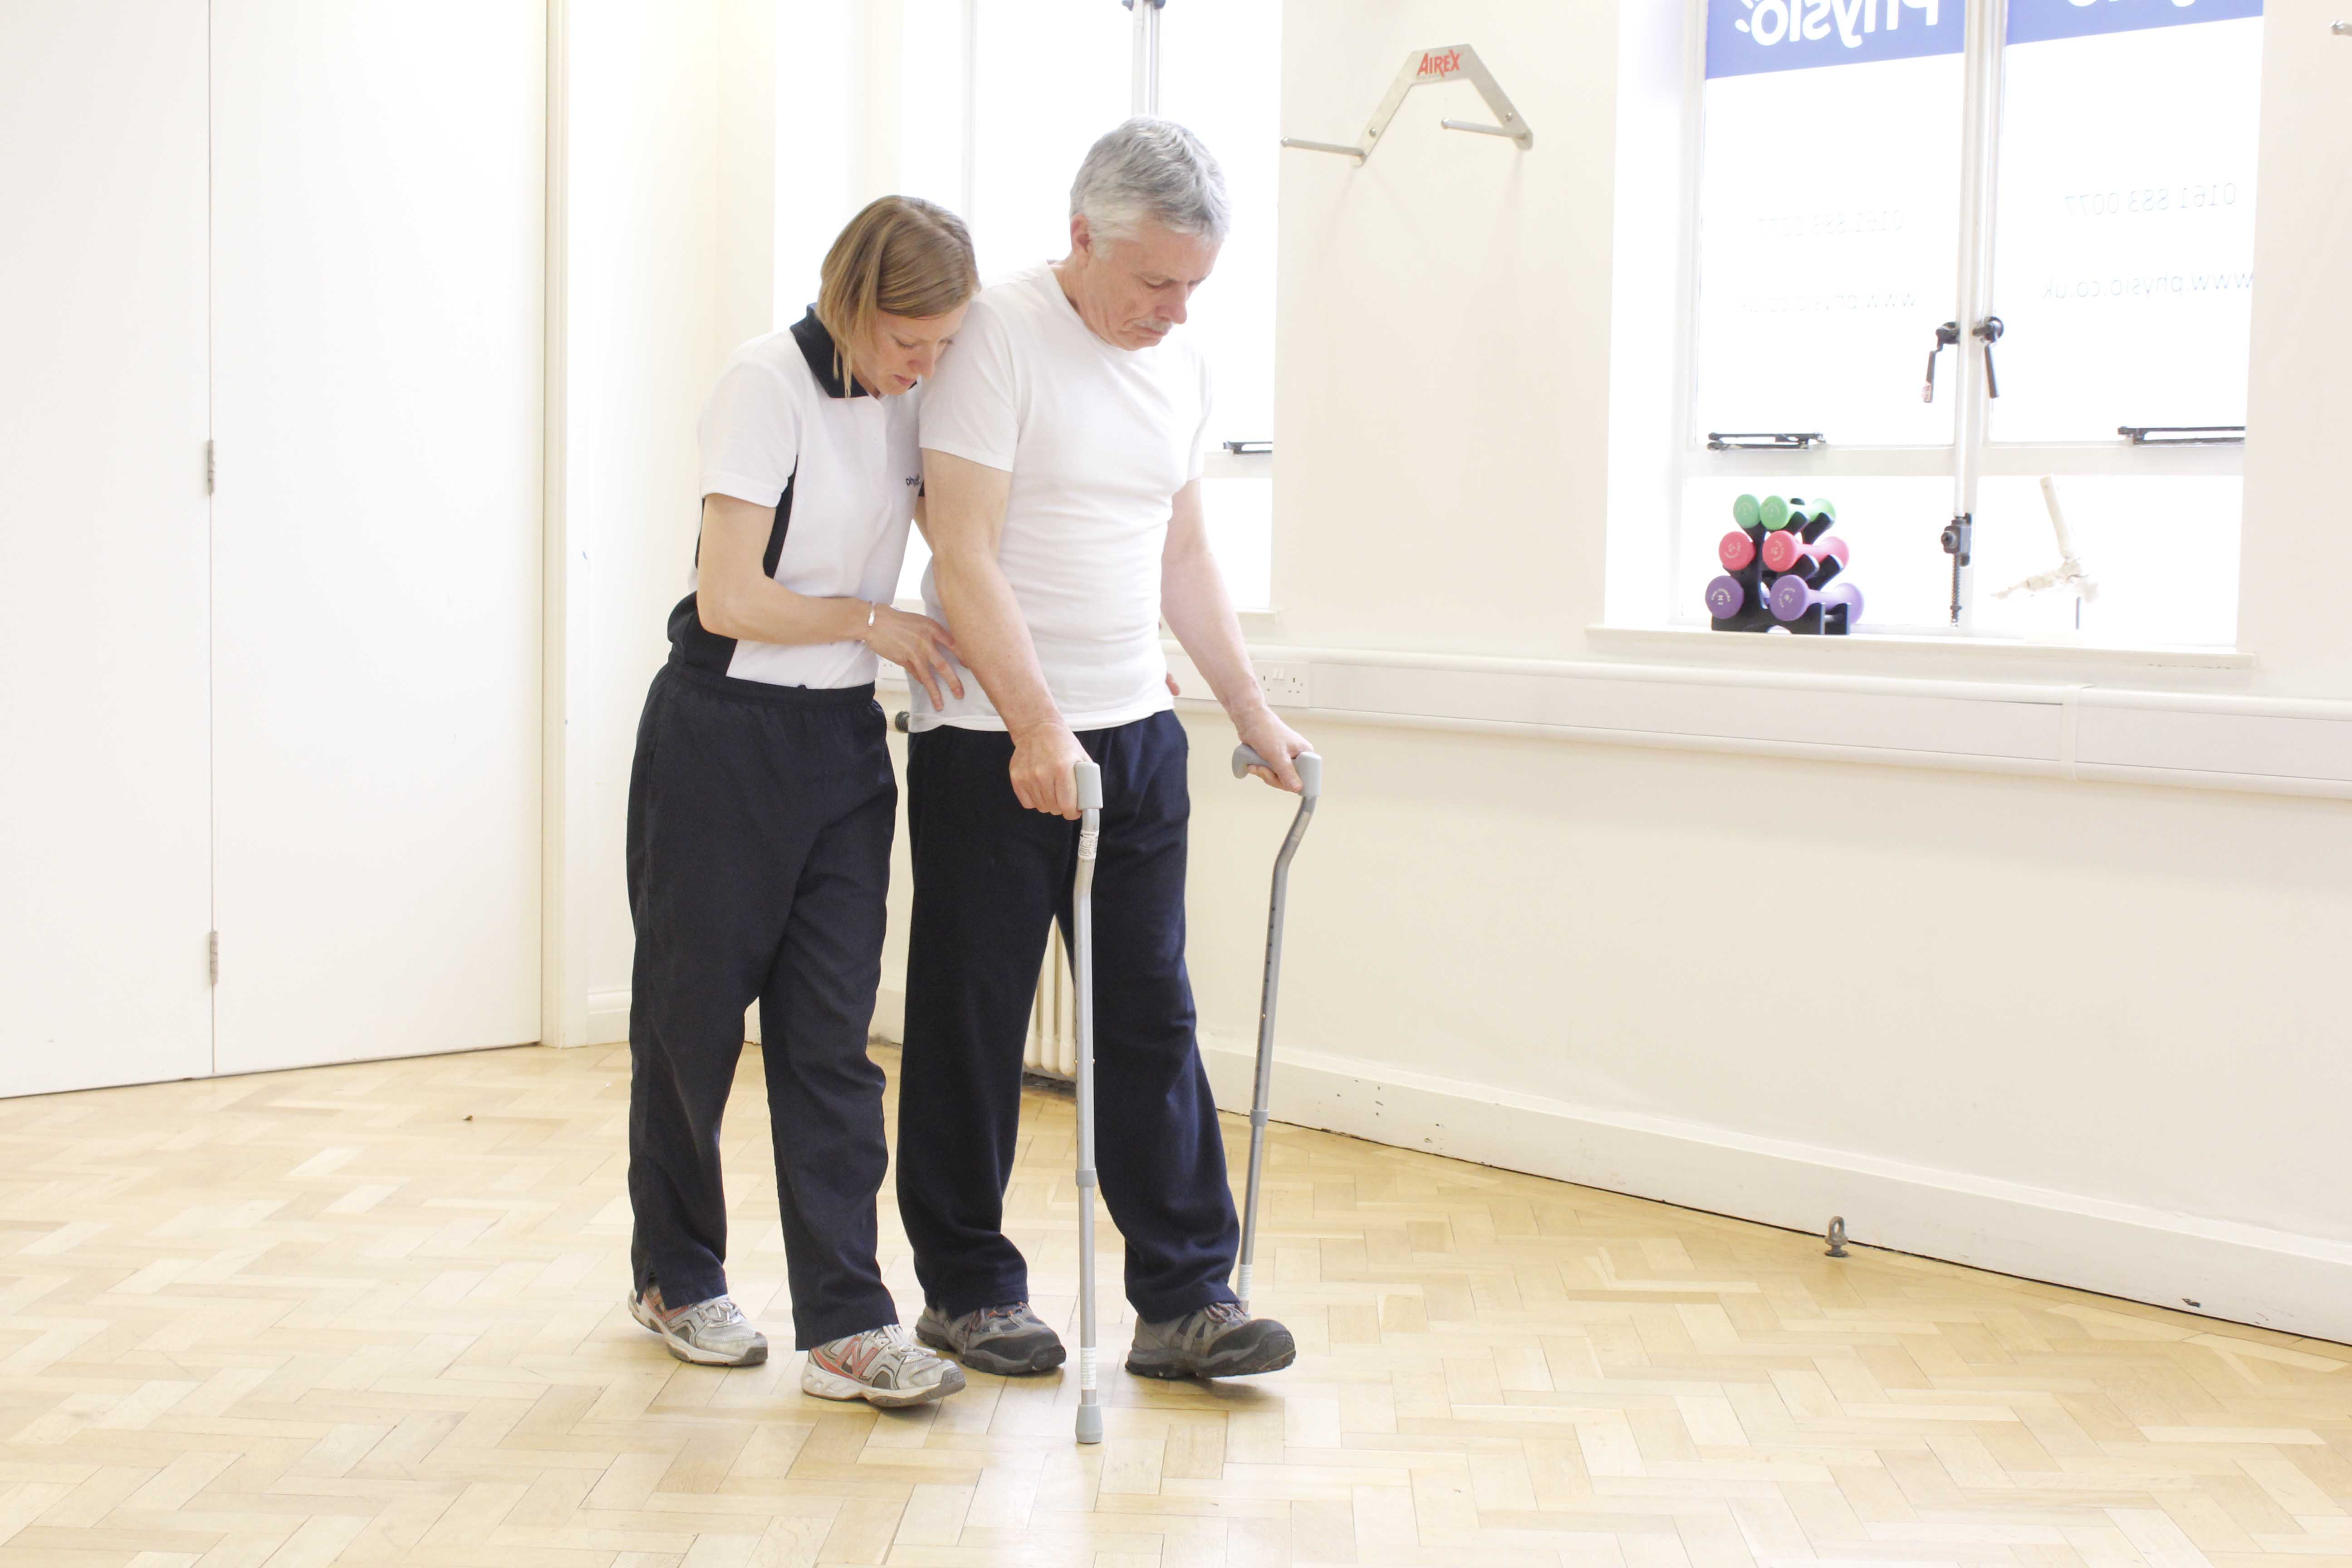 Mobilisation exercises using walking sticks supervised by a neuro physiotherapist